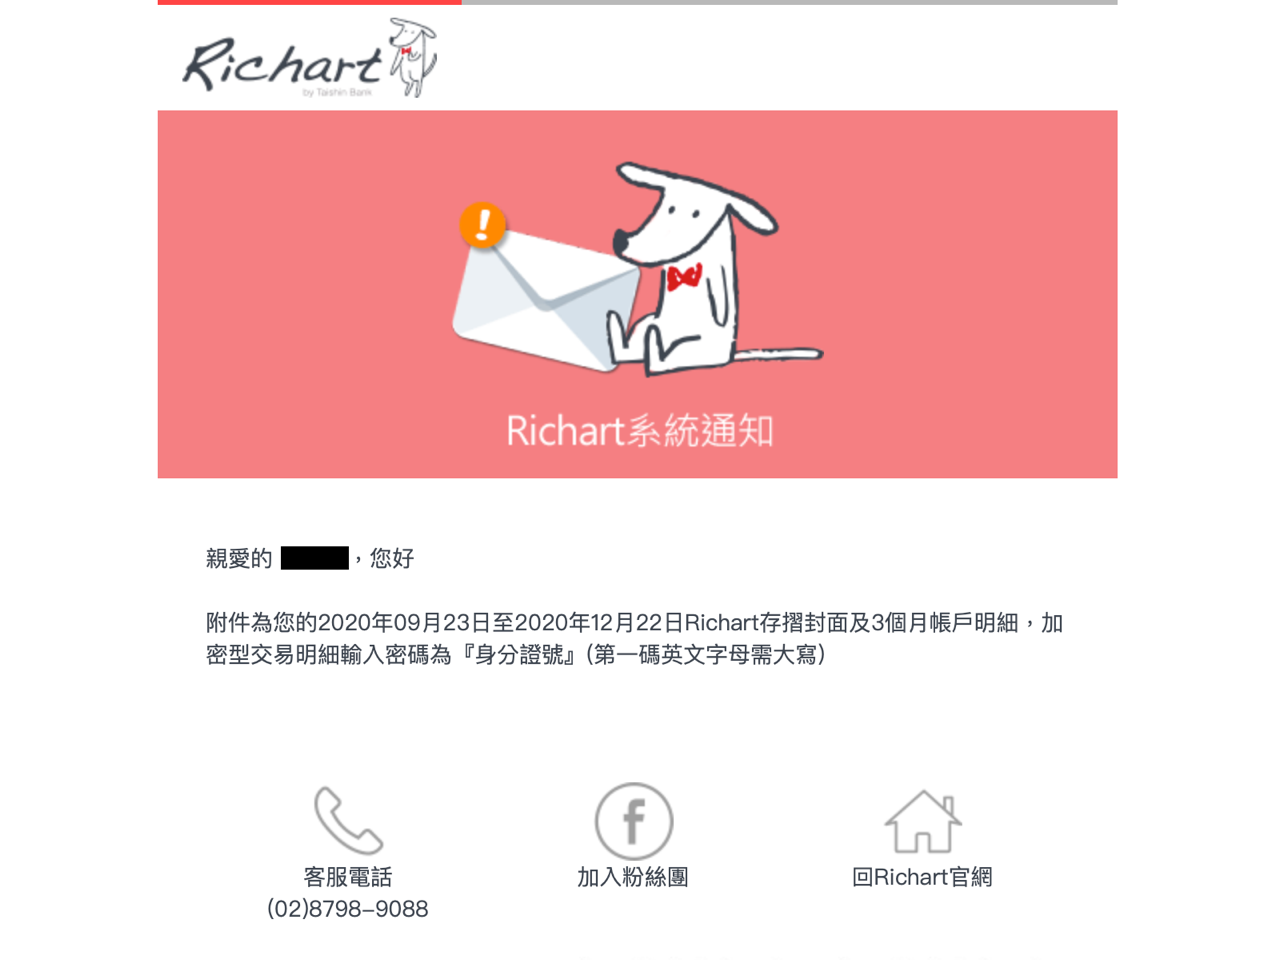 Richart 存摺封面和帳戶交易明細